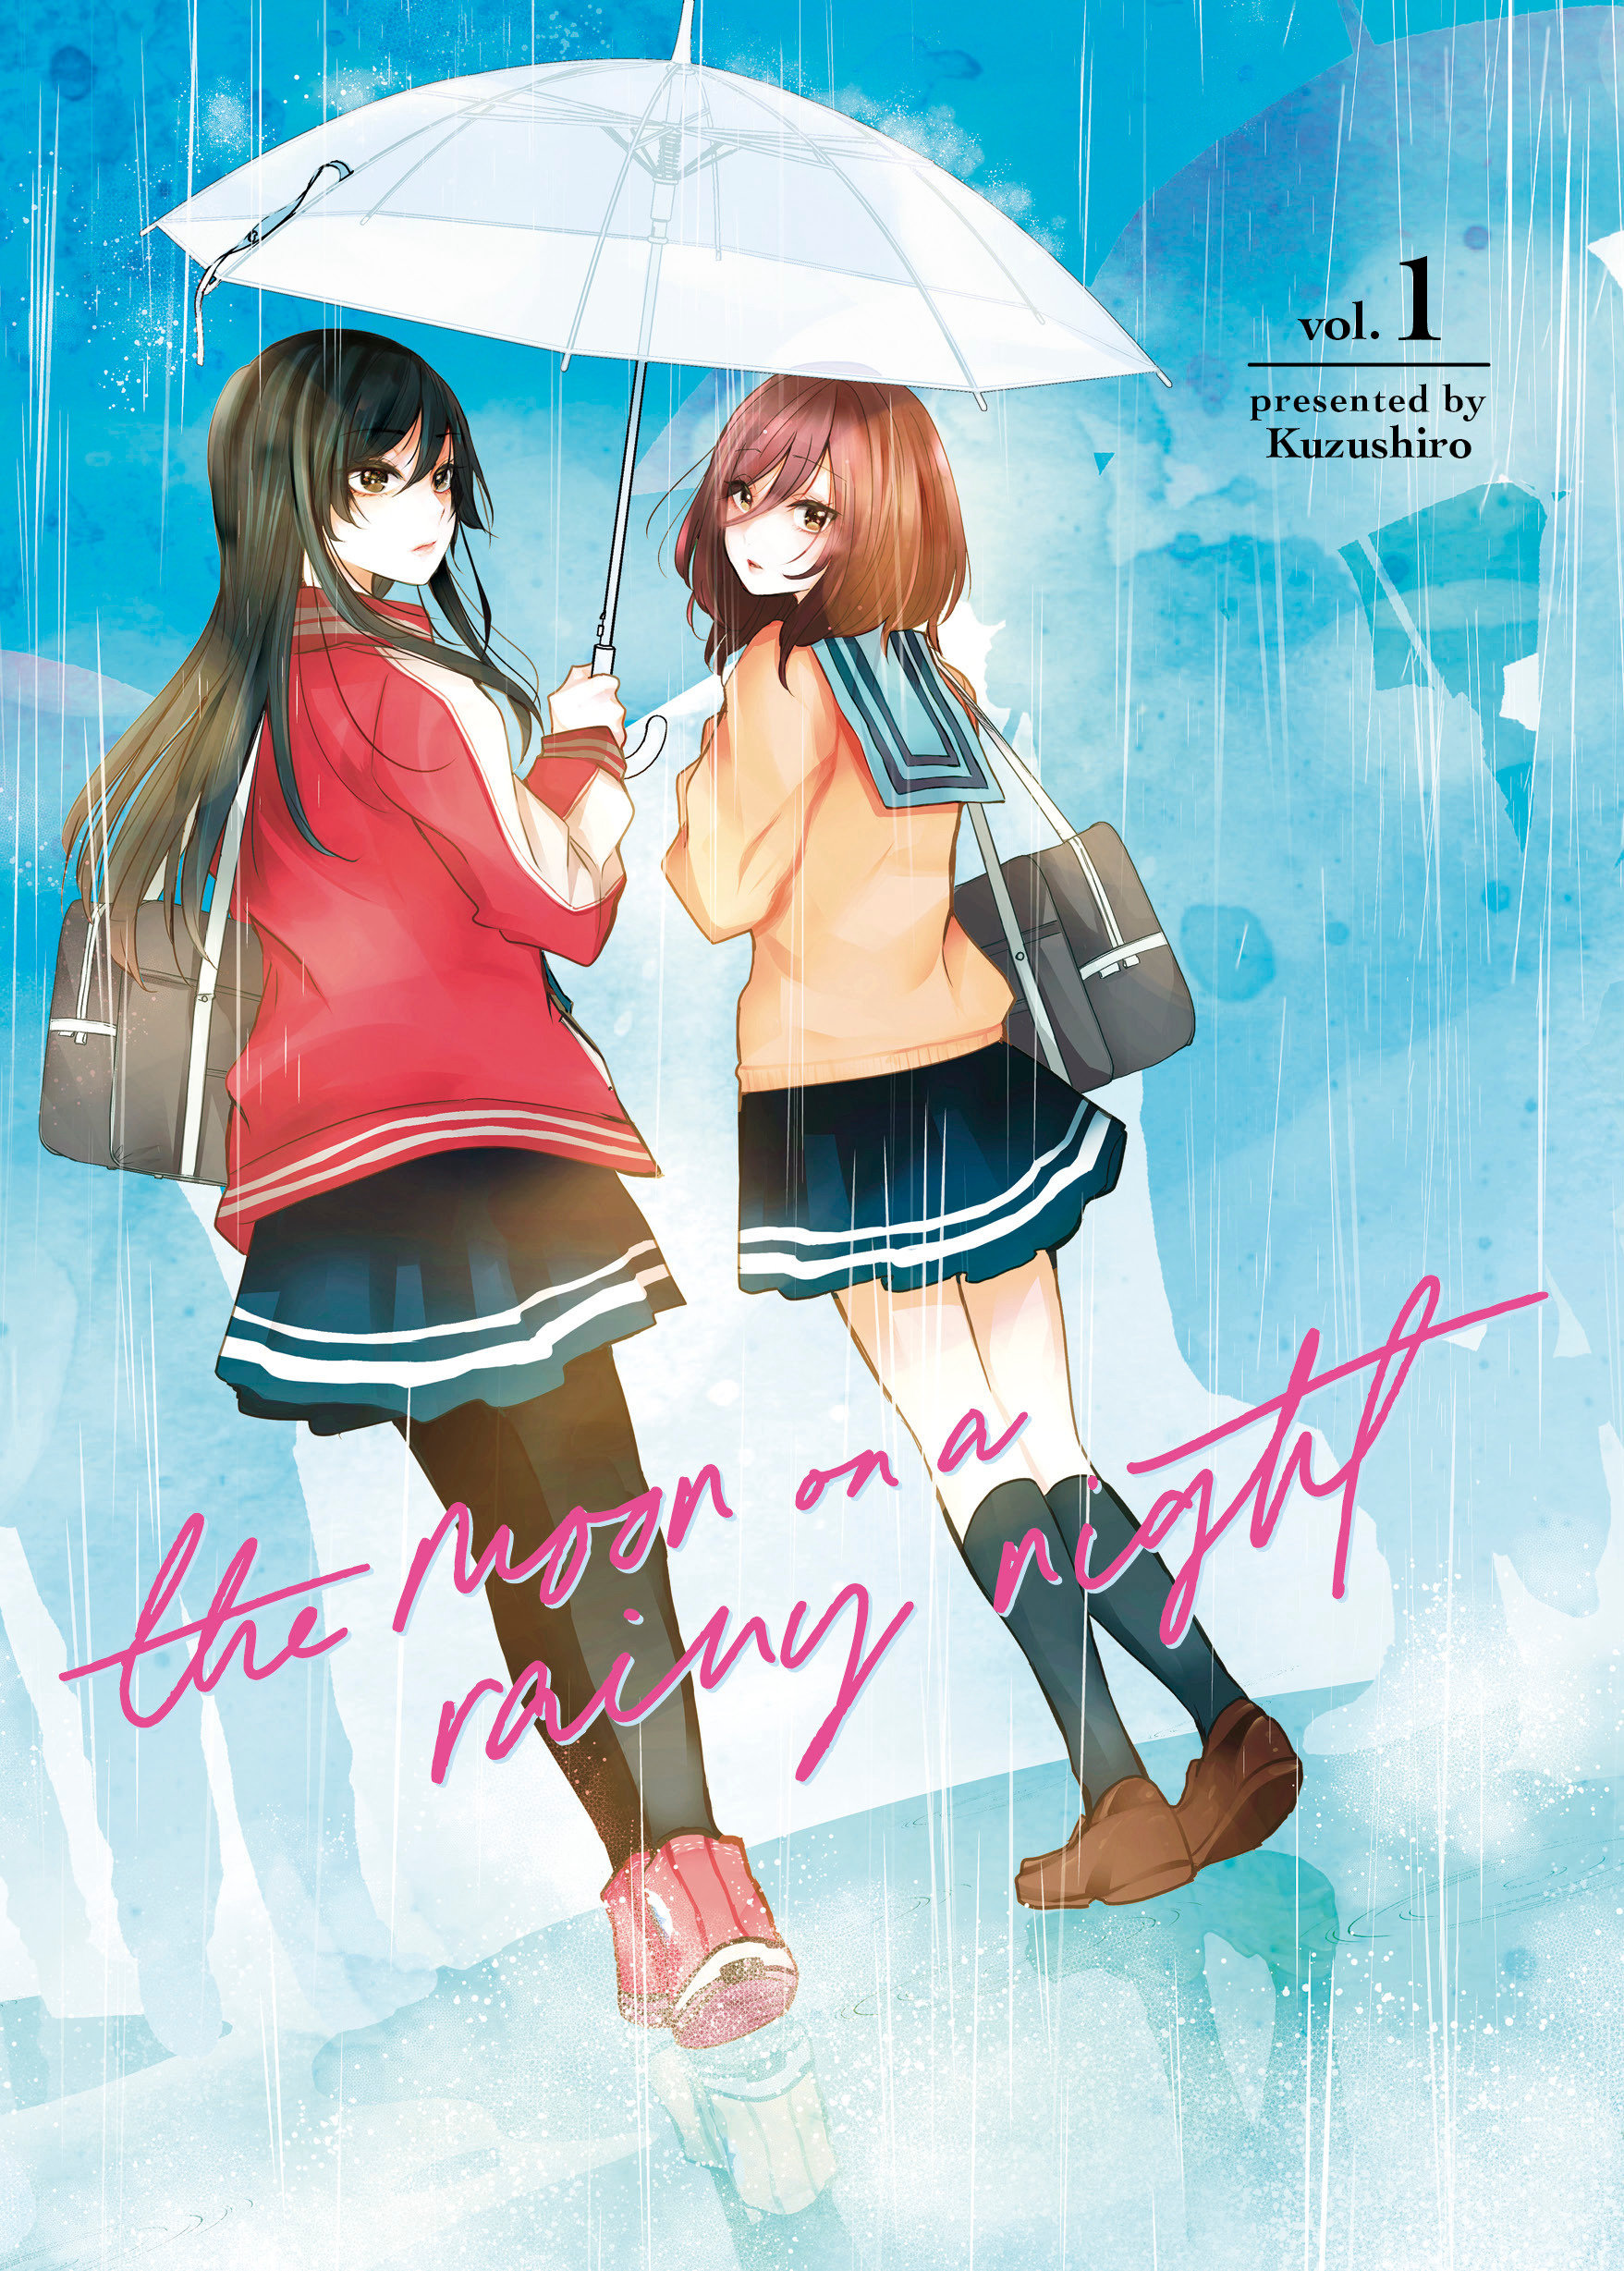 Moon on a Rainy Night Manga Volume 1